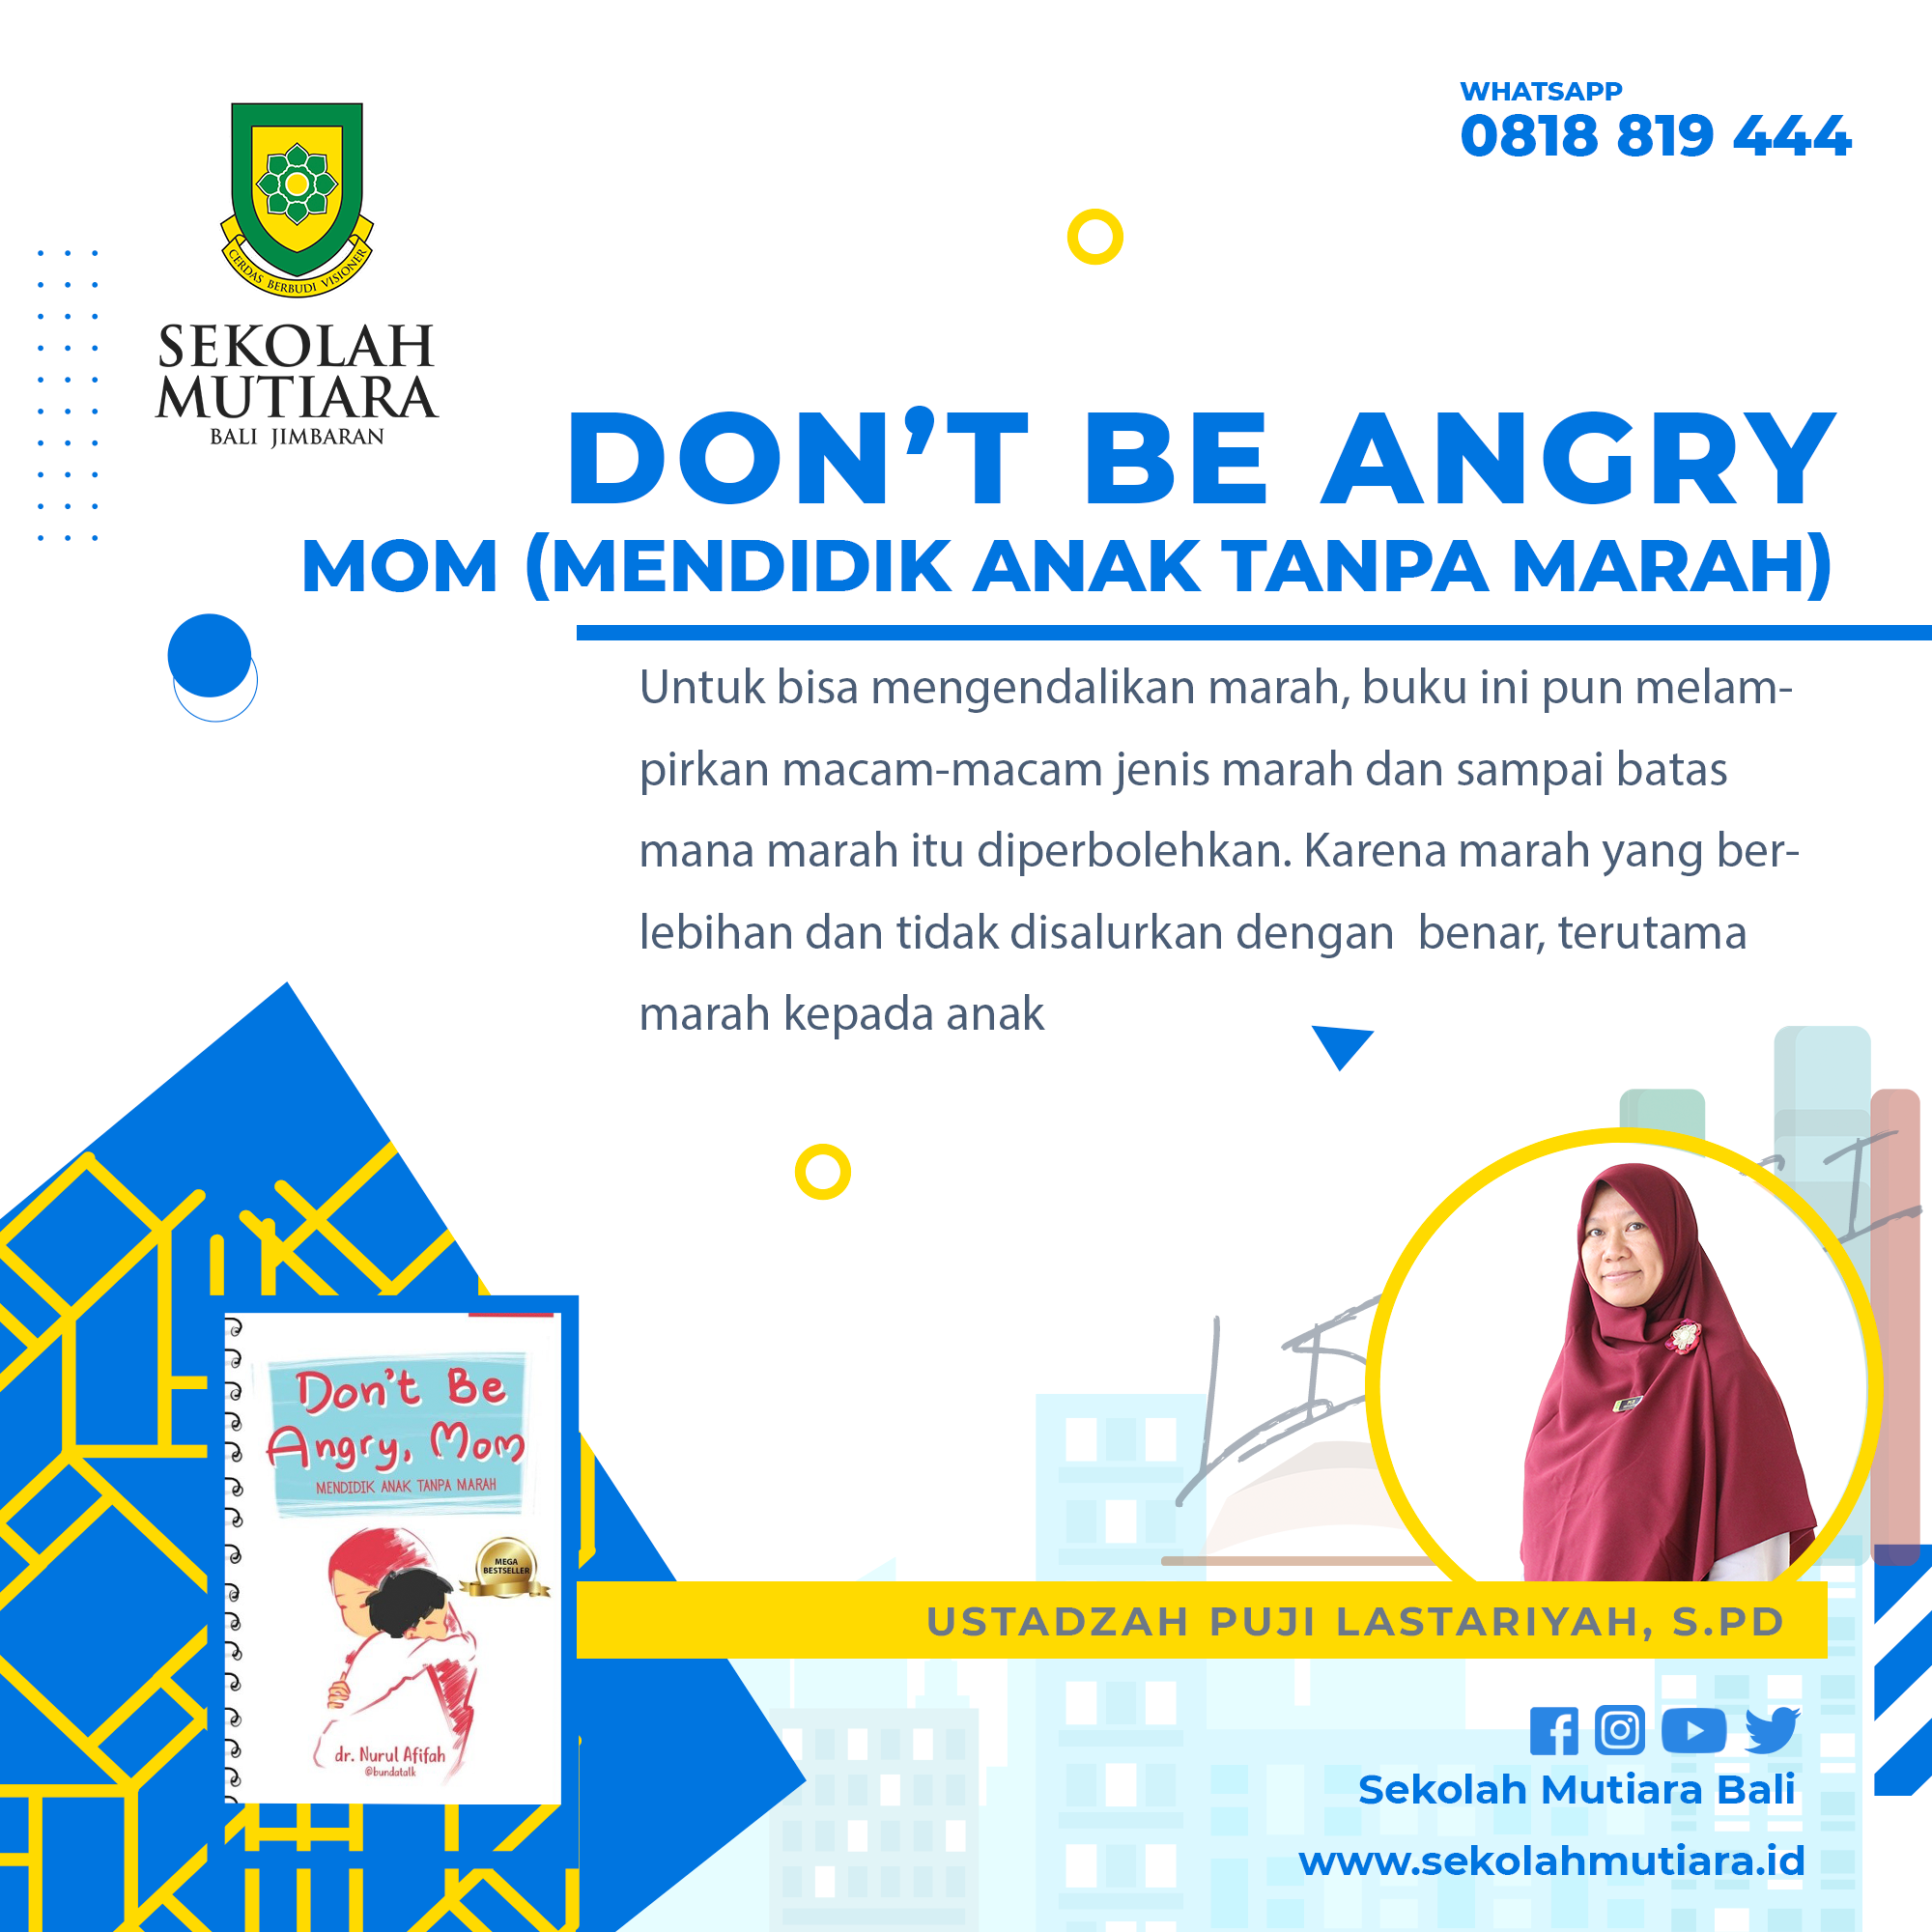 DON’T BE ANGRY MOM (MENDIDIK ANAK TANPA MARAH)